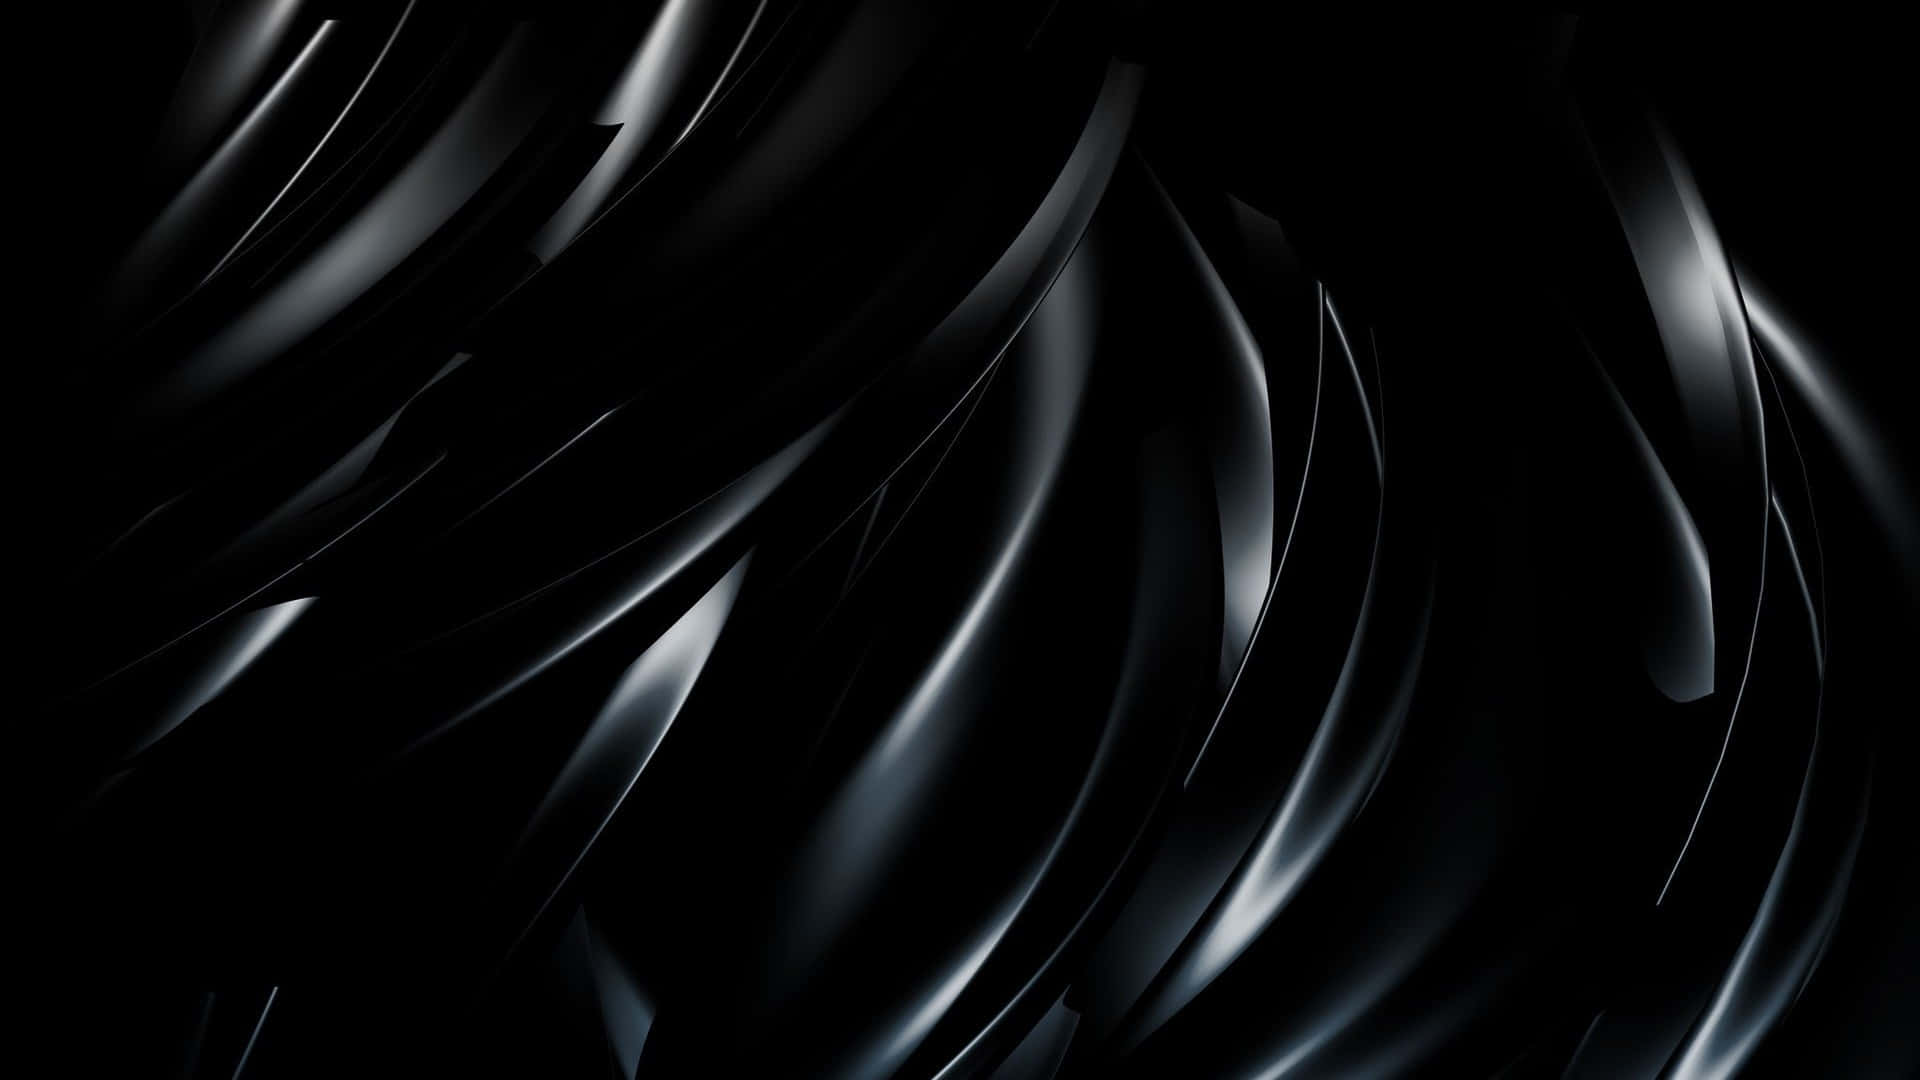 Soft Black and Dark Gray Colors in a Mac Screen Wallpaper